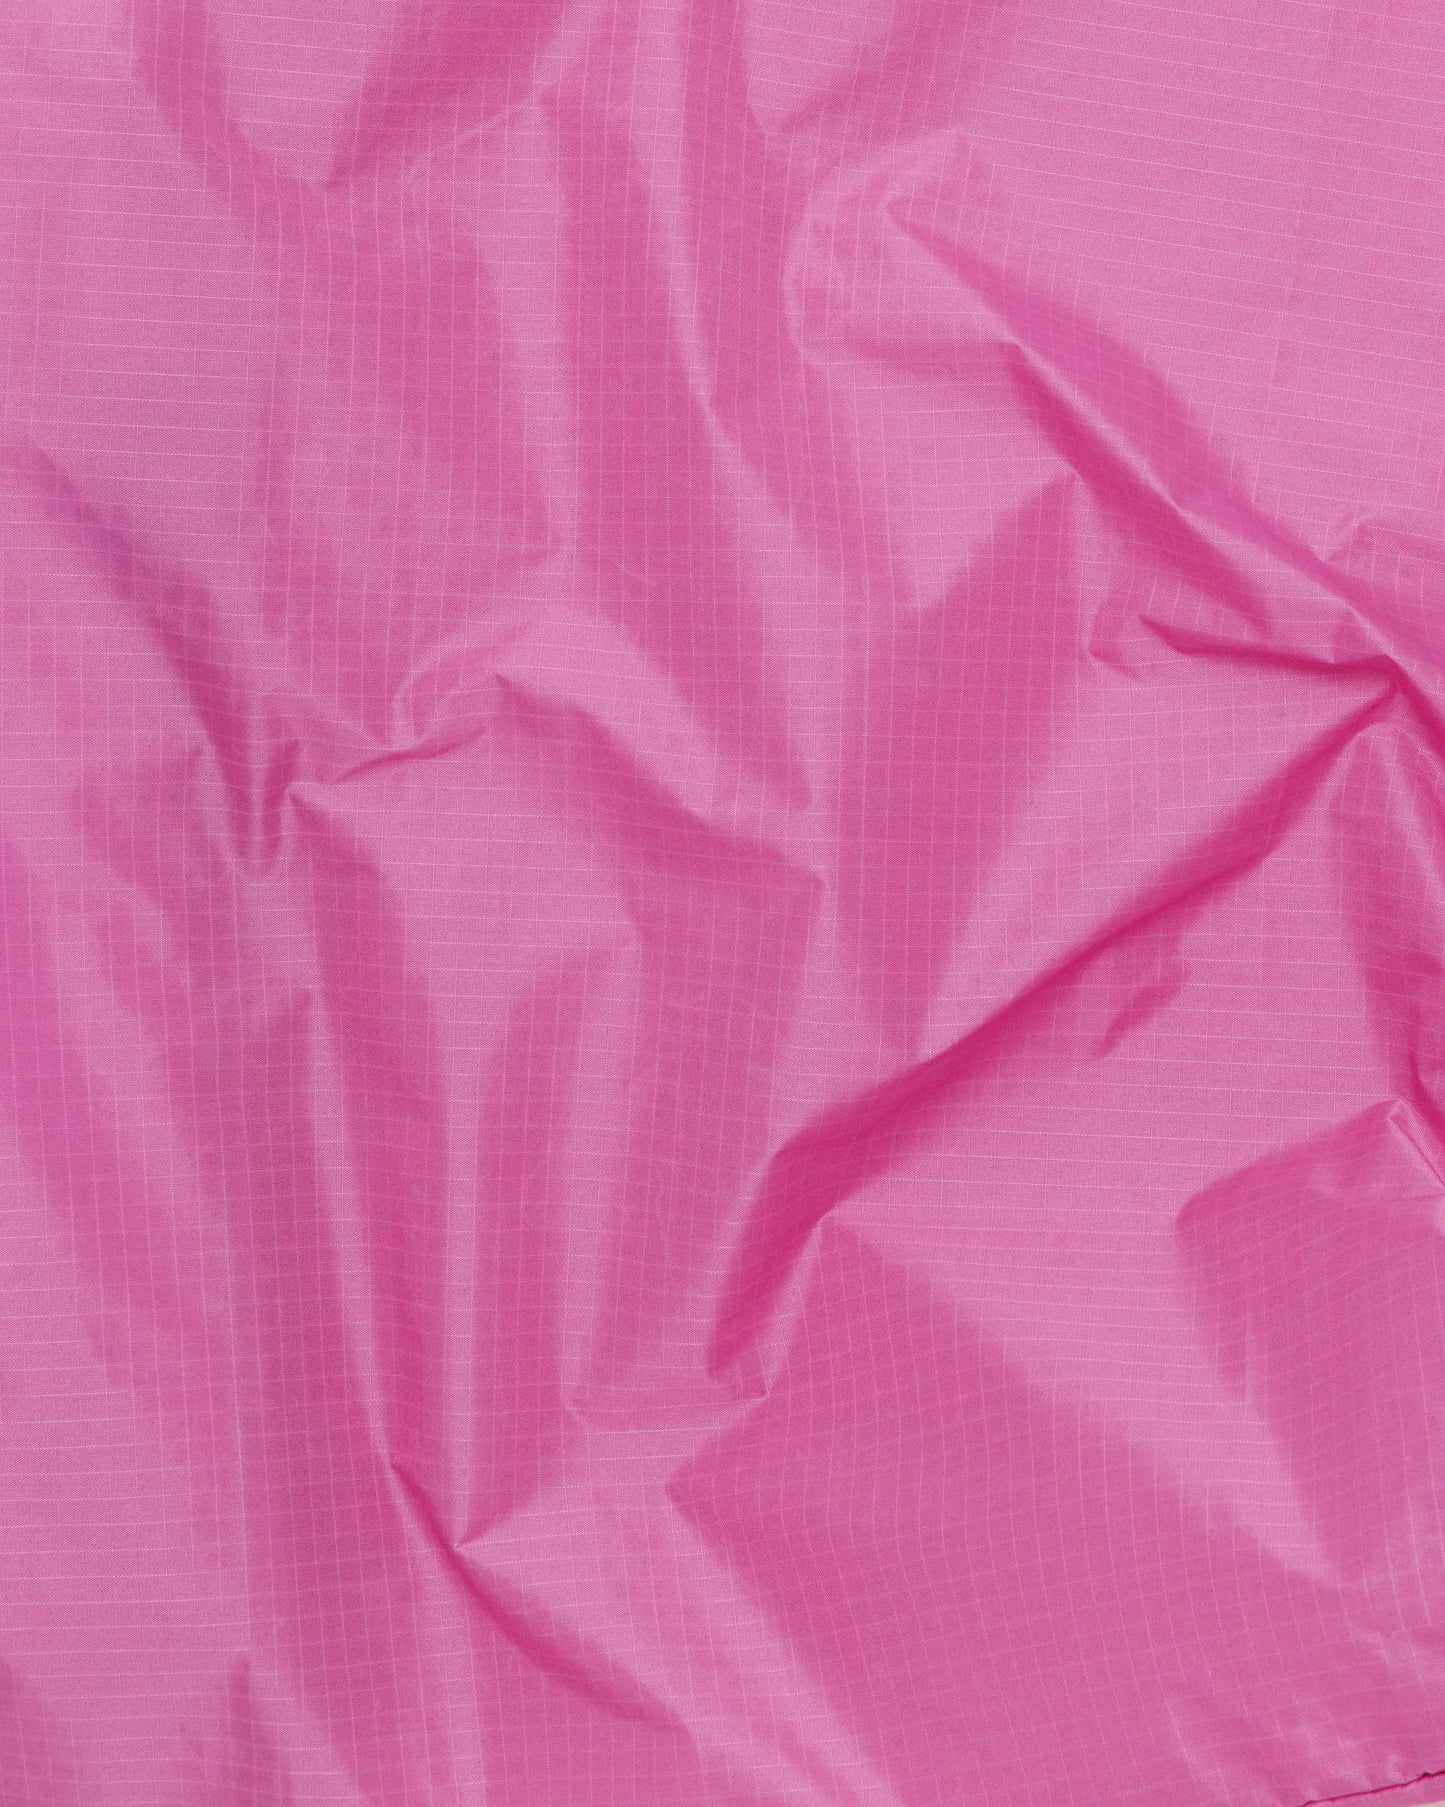 
                  
                    Extra Pink Standard Baggu Bag
                  
                